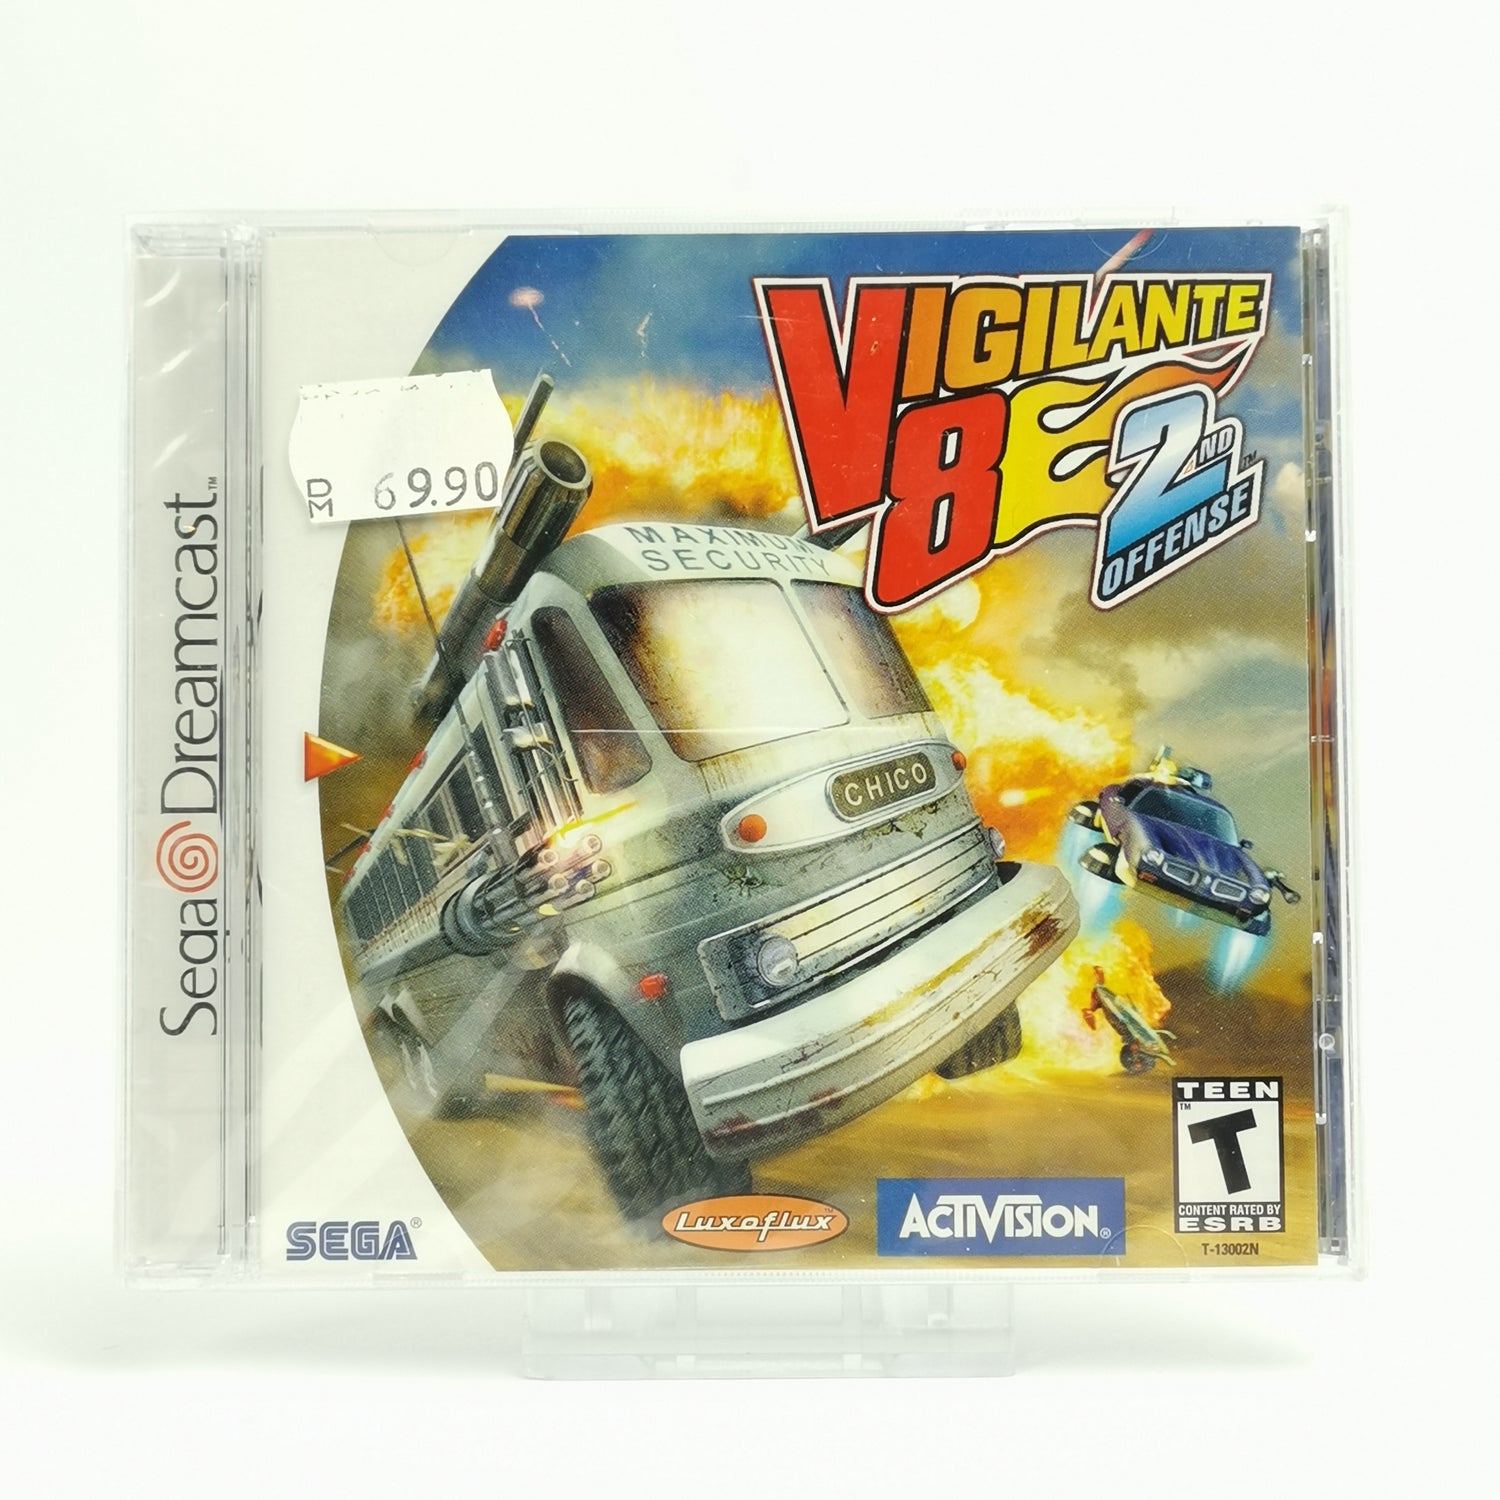 American Sega Dreamcast game: Vigilante 8 2nd Offense | New New Sealed